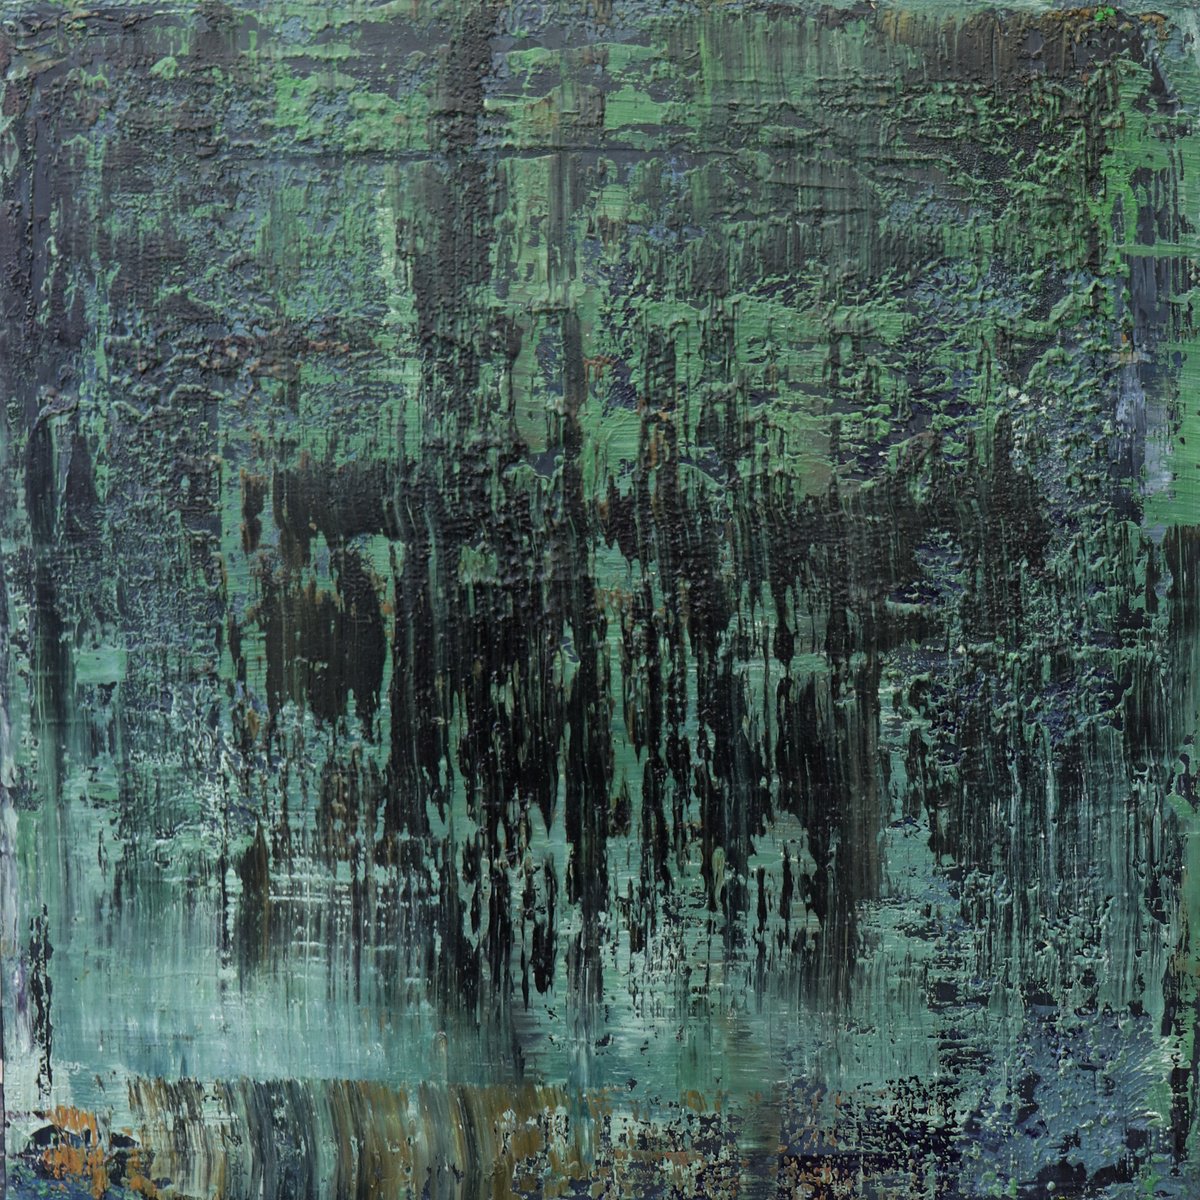 The Black Forest [Abstract Ndeg2804] by Koen Lybaert